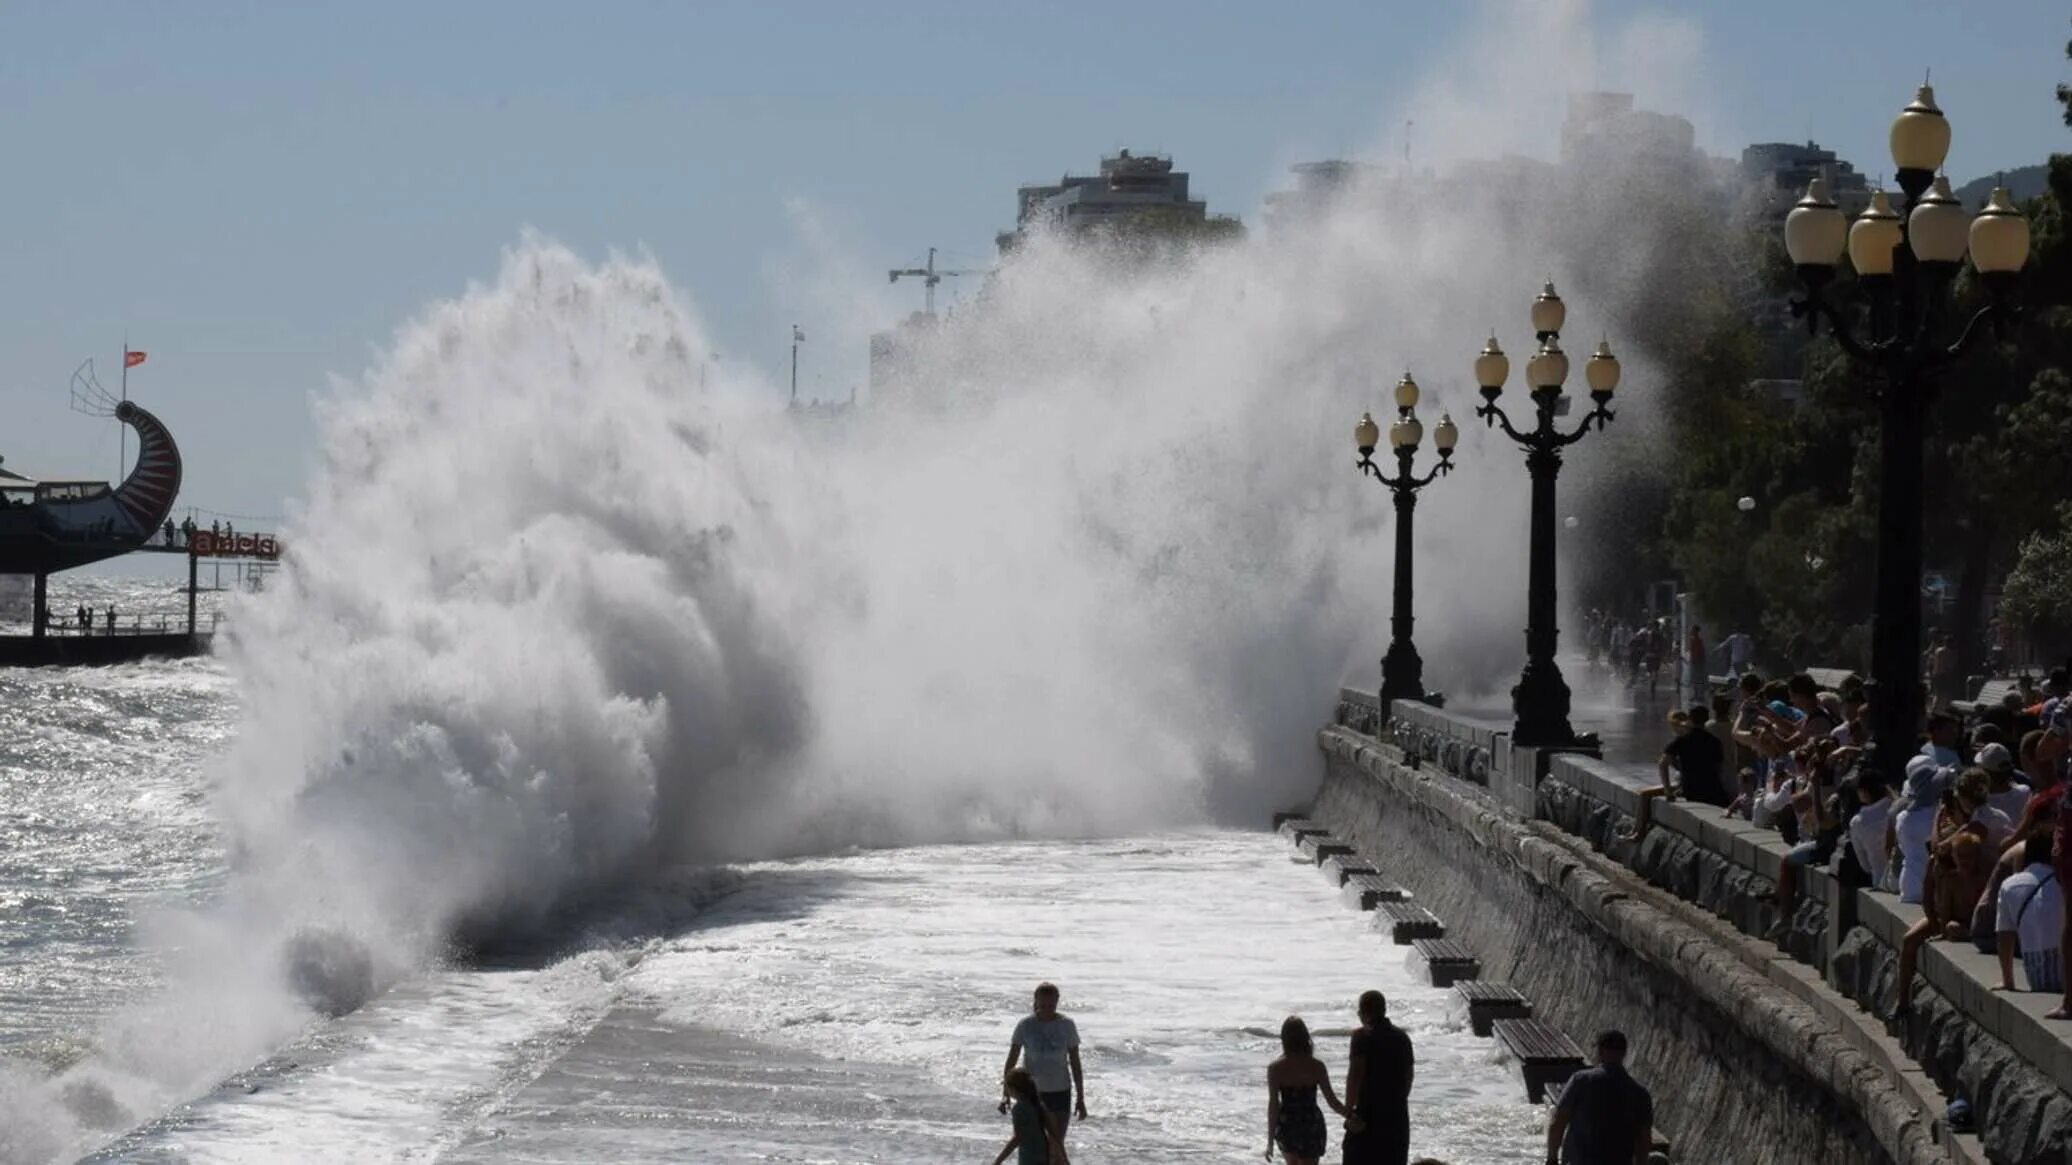 Кипит волна. Крым шторм Ялта. Шторм на море в Ялте. Ялта волны шторм. Ялта вчера шторм.